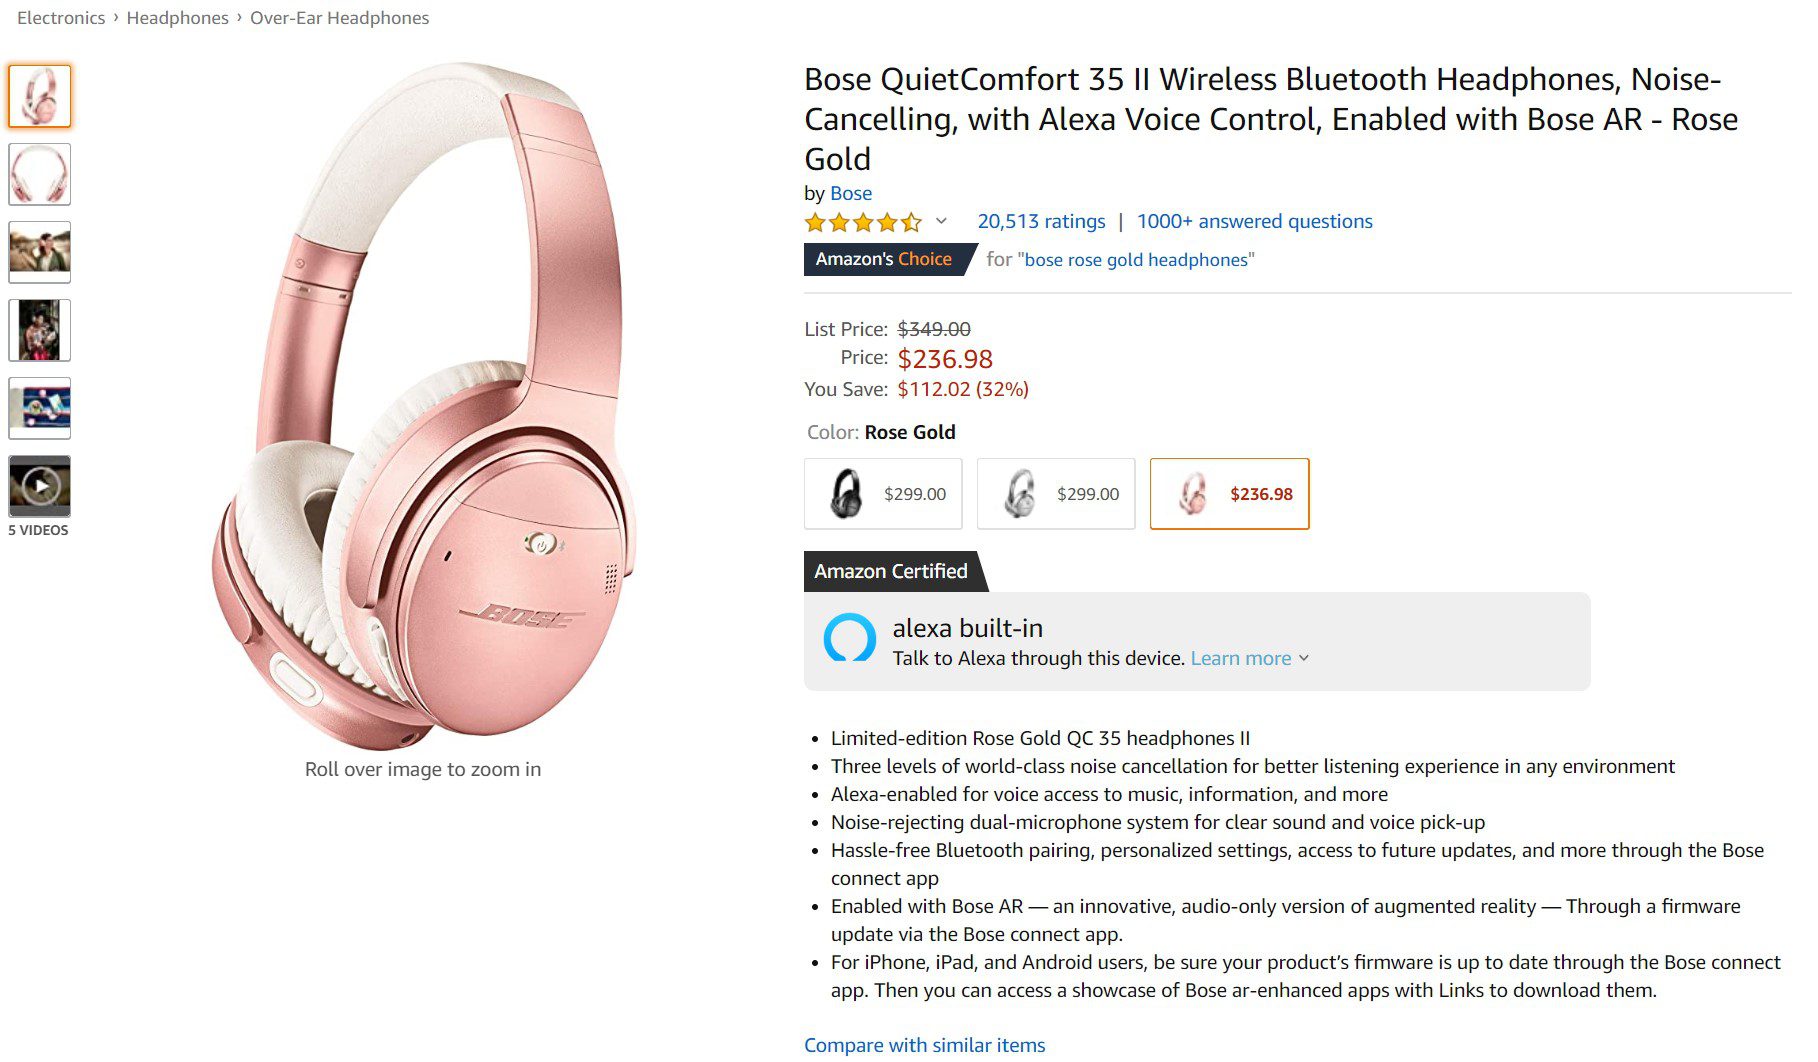 Alert: Bose QC 35 II wireless headphones price reaches new low - MSPoweruser